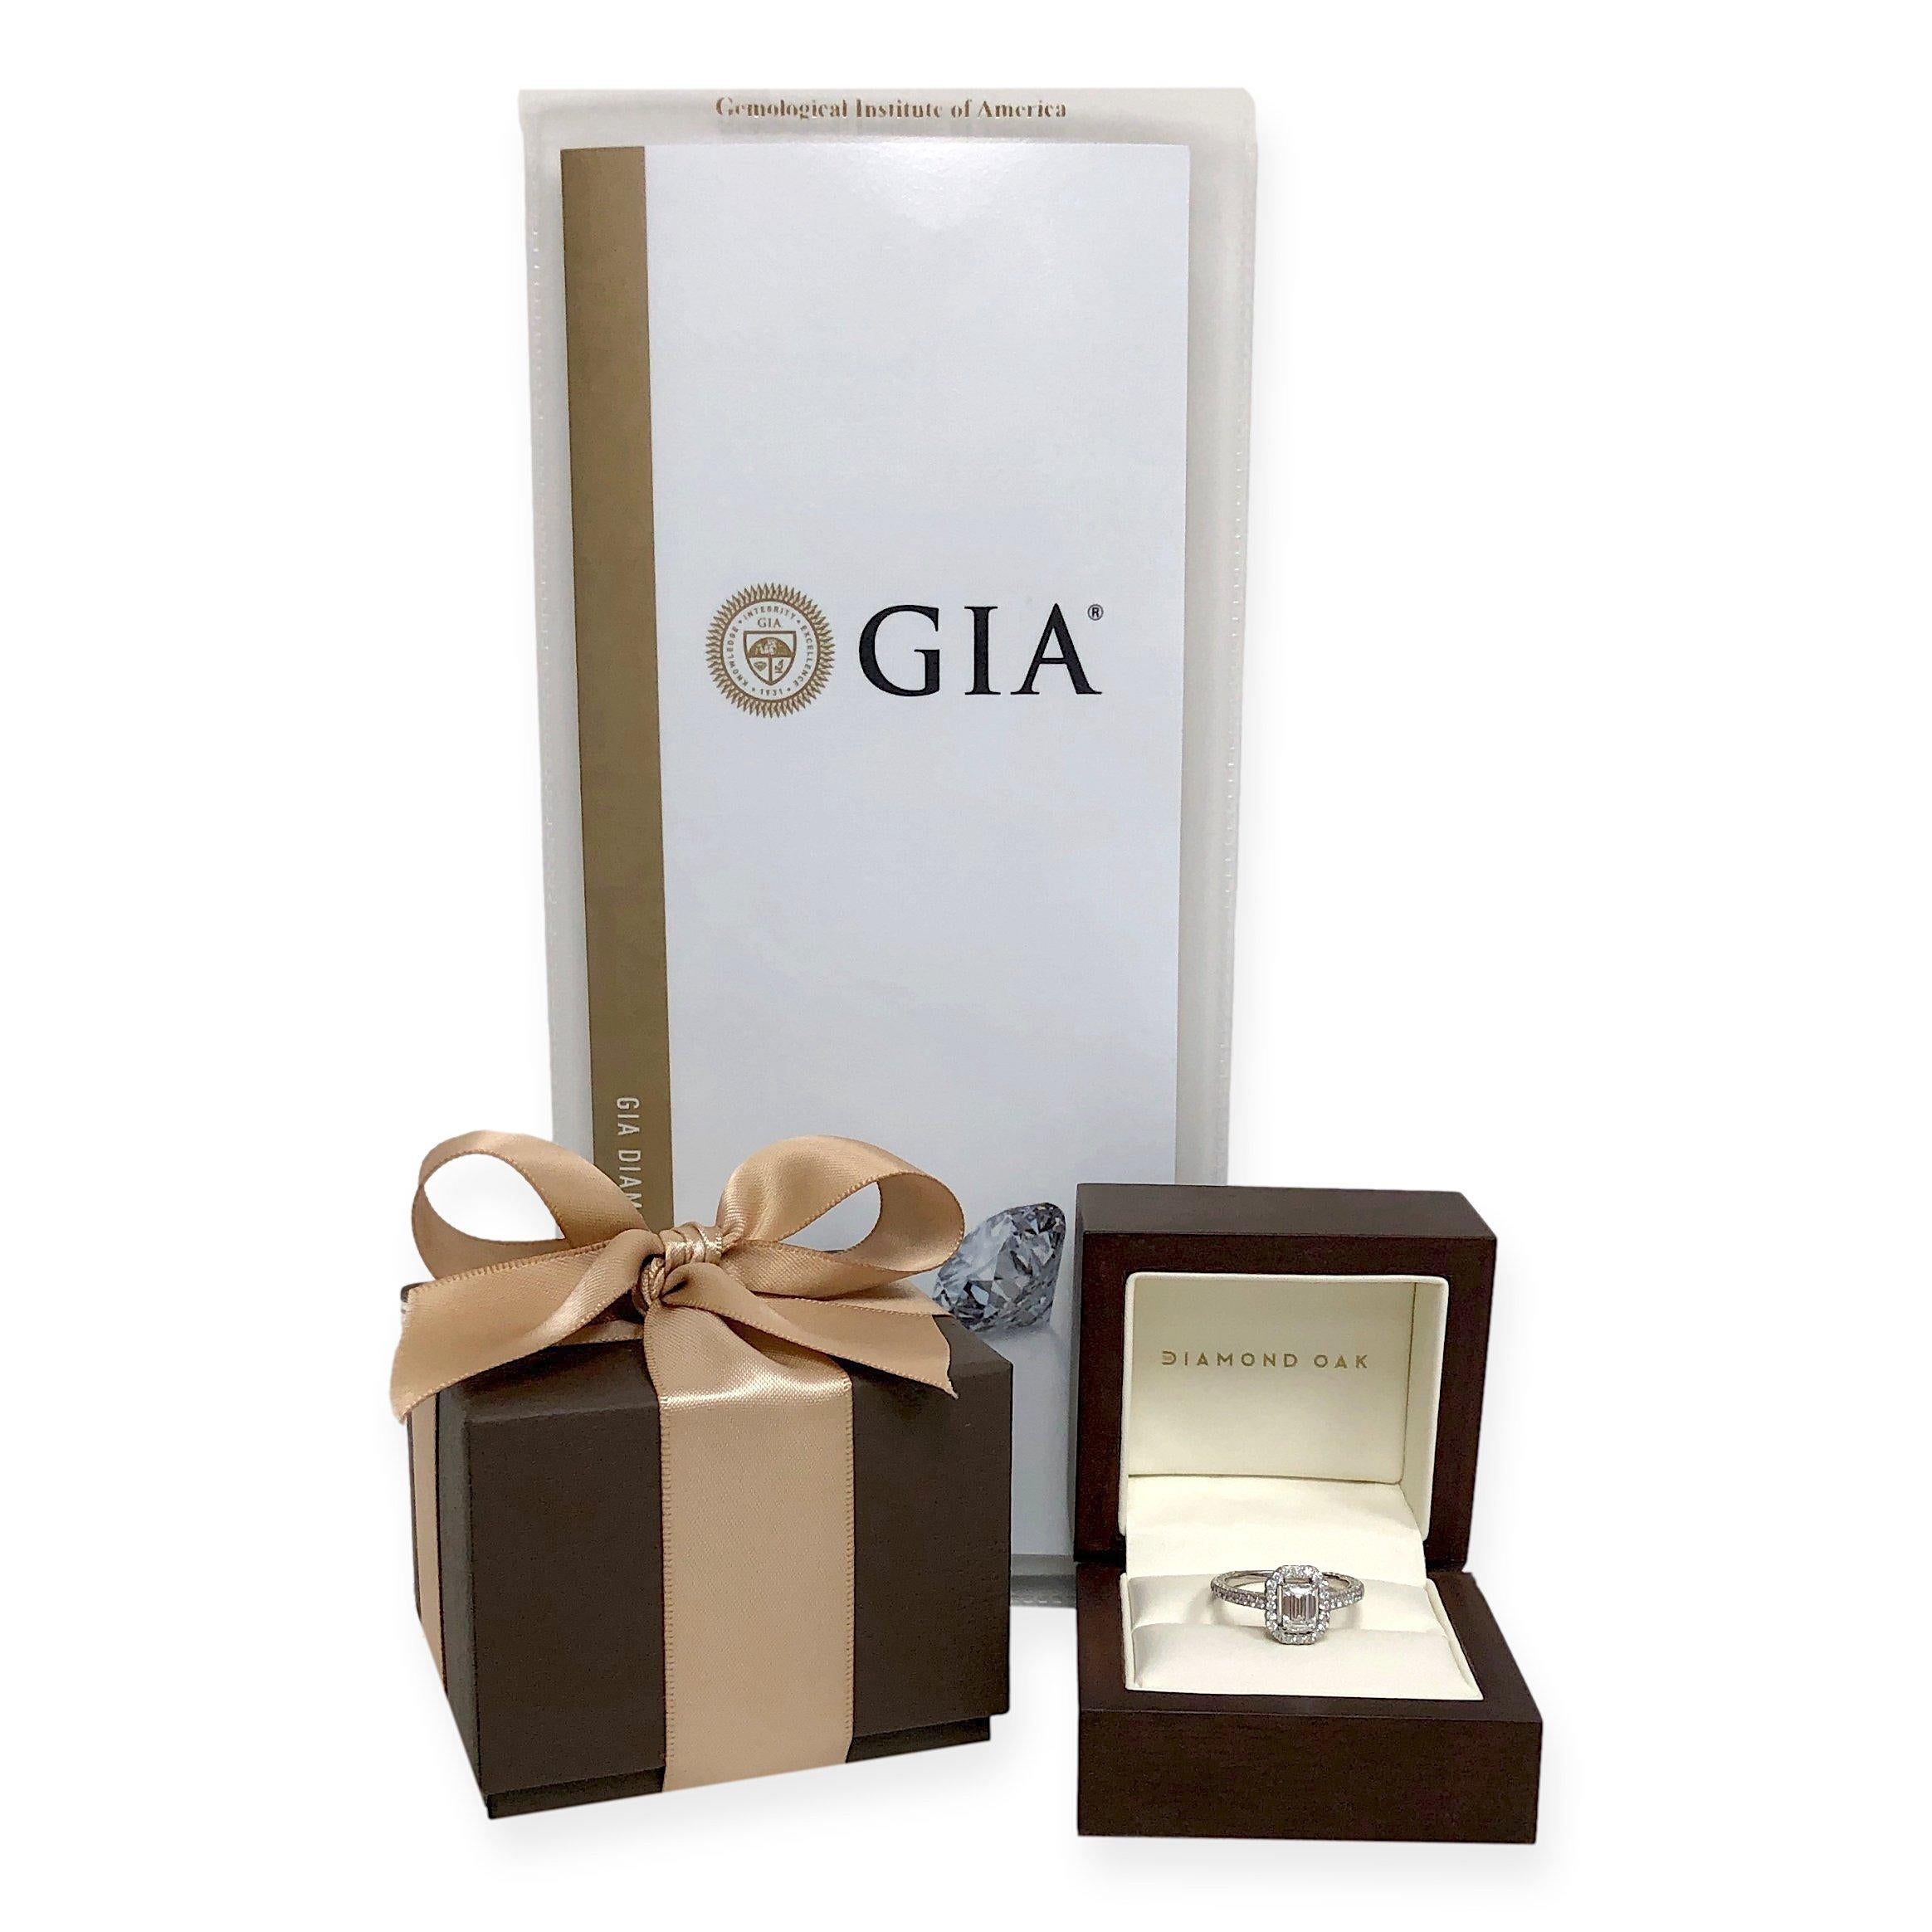 GRAFF 18K White Gold GIA Emerald Cut Diamond Engagement Ring  1.85 cts. TW F VS1 7